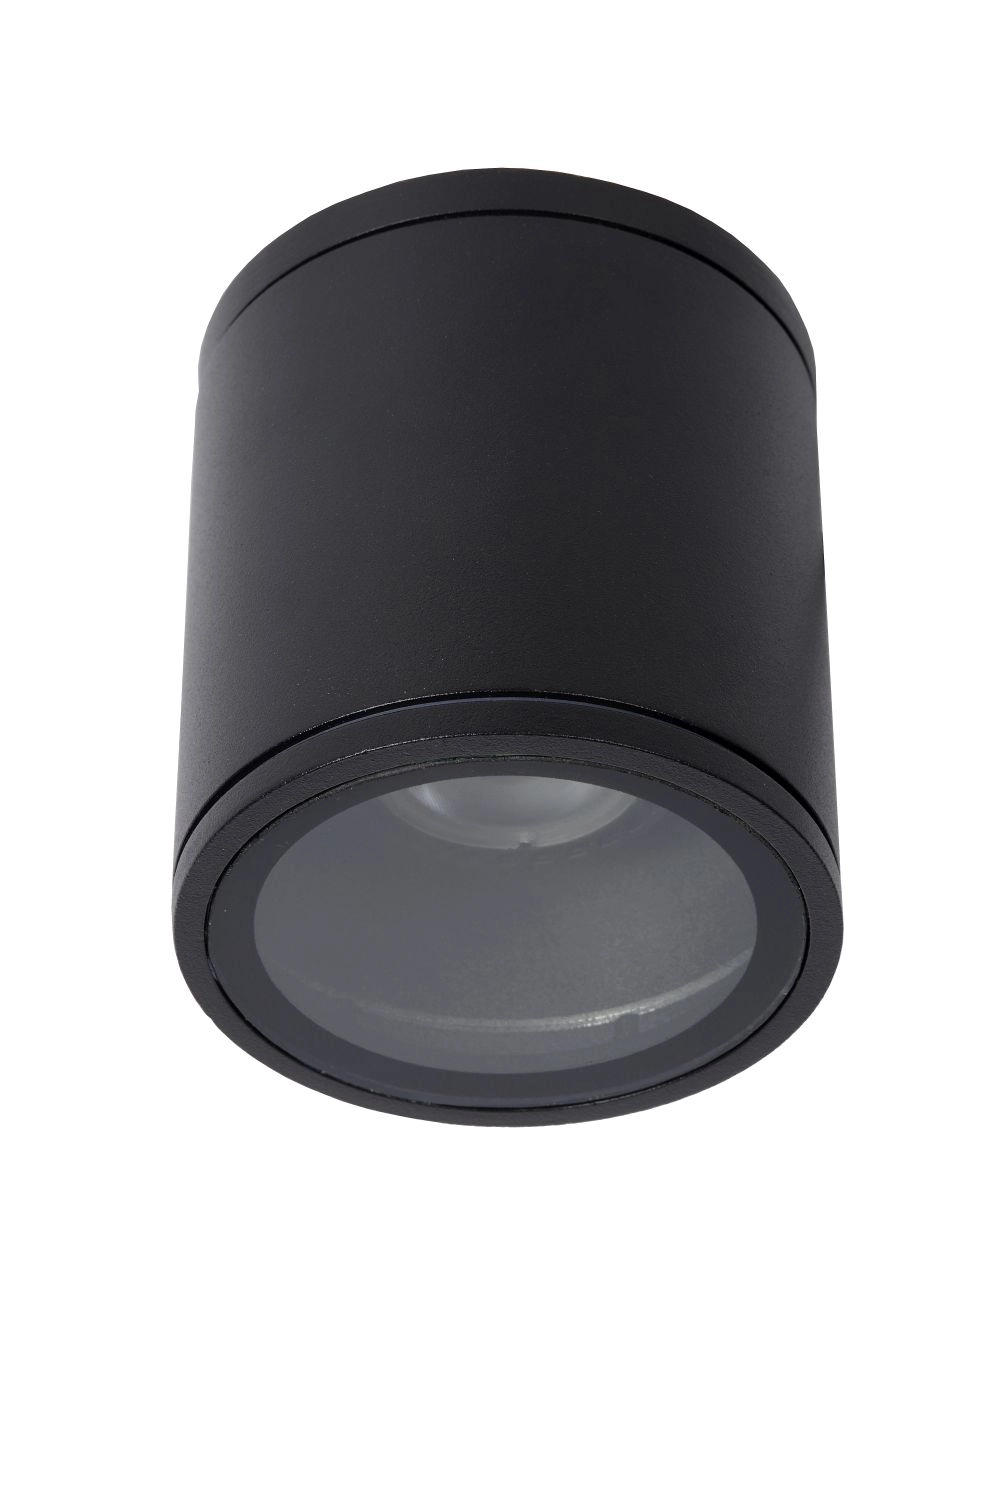 LU 22962/01/30 Lucide AVEN - Ceiling spotlight Bathroom - Ø 9 cm - 1xGU10 - IP65 - Black